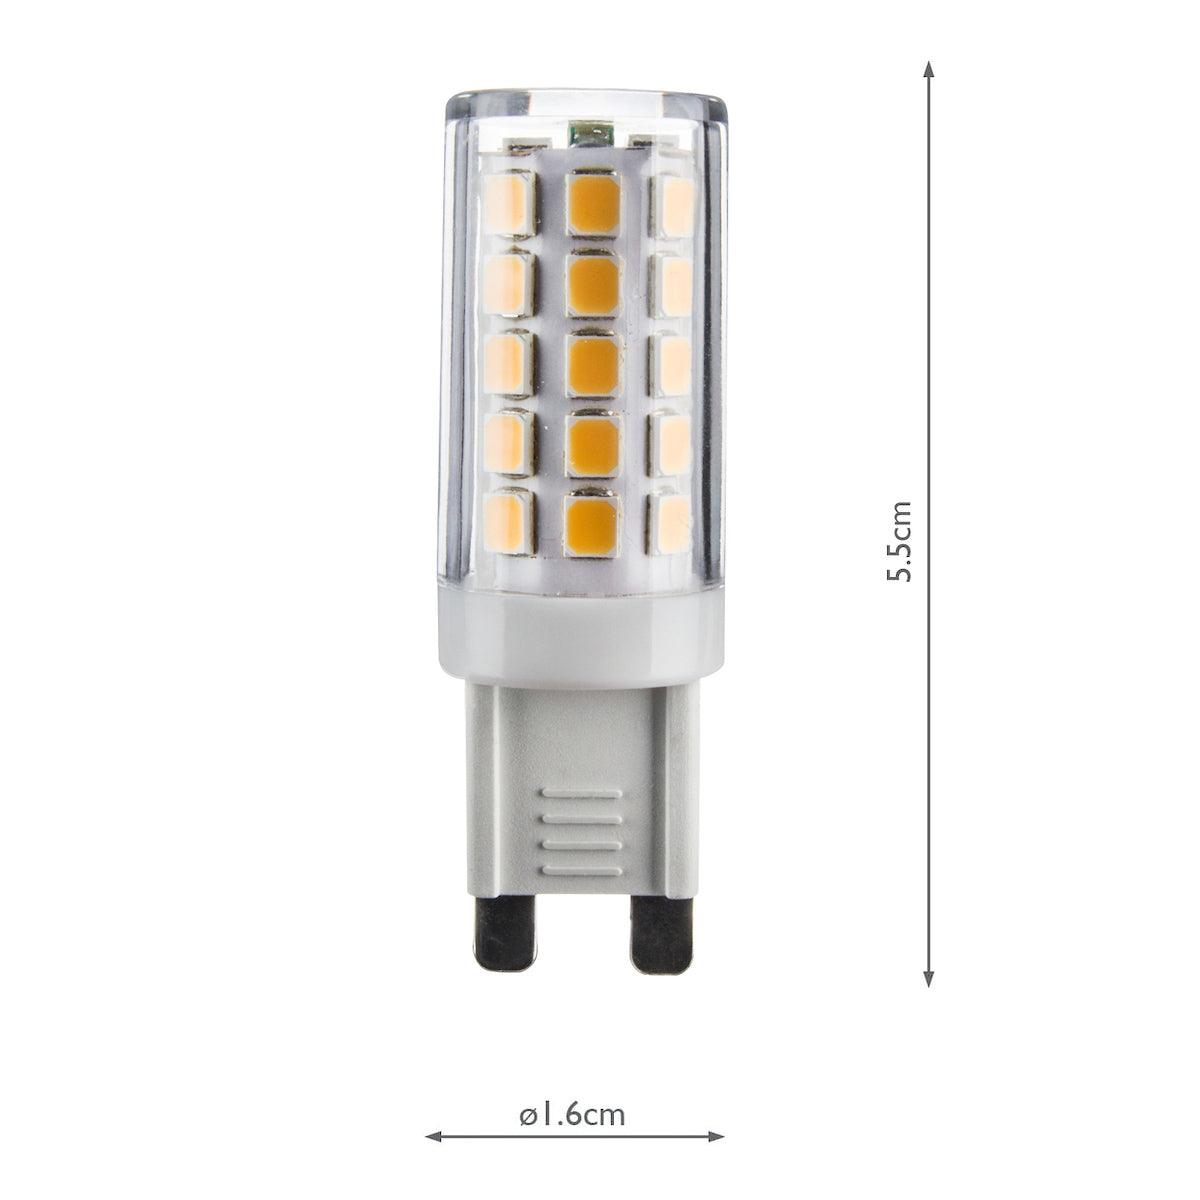 G9 LED LAMP 3W 300LM 2700K CLEAR - Peter Murphy Lighting & Electrical Ltd